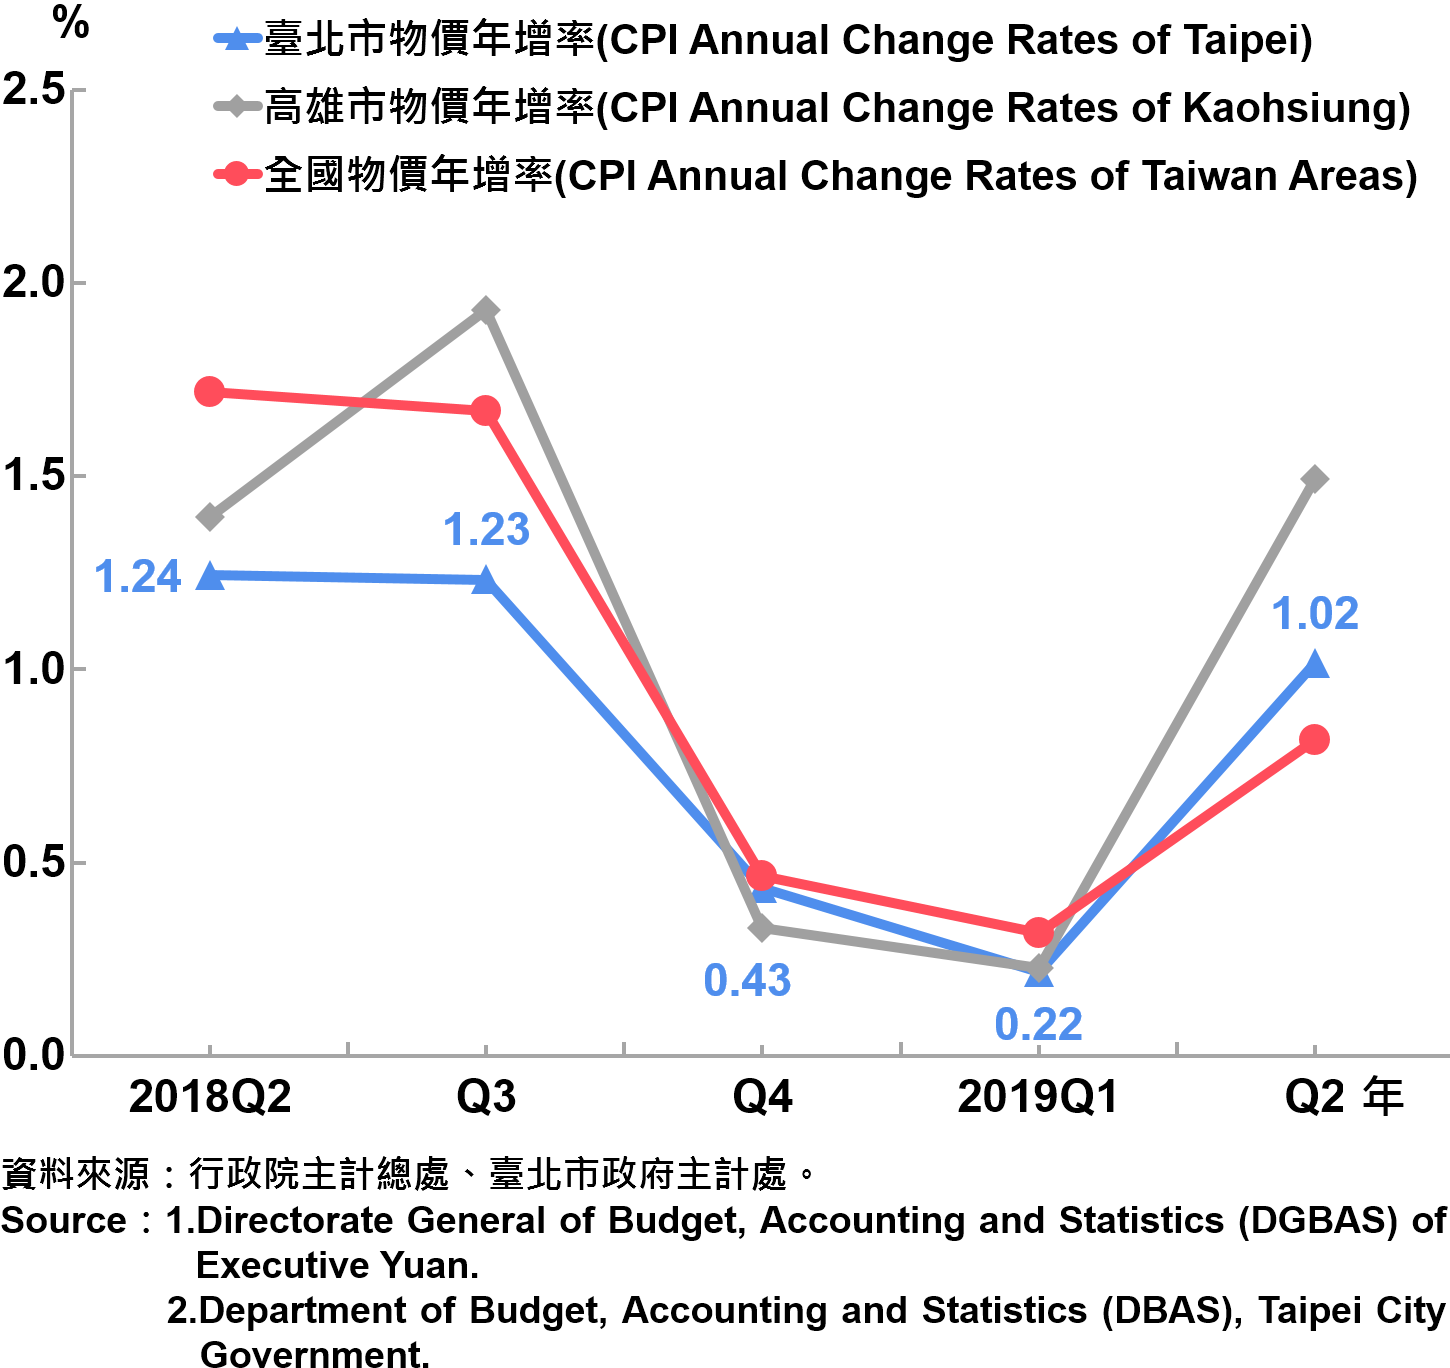 臺北市消費者物價指數（CPI）年增率—2019Q2 Annual Growth Rate of CPI in Taipei City—2019Q2